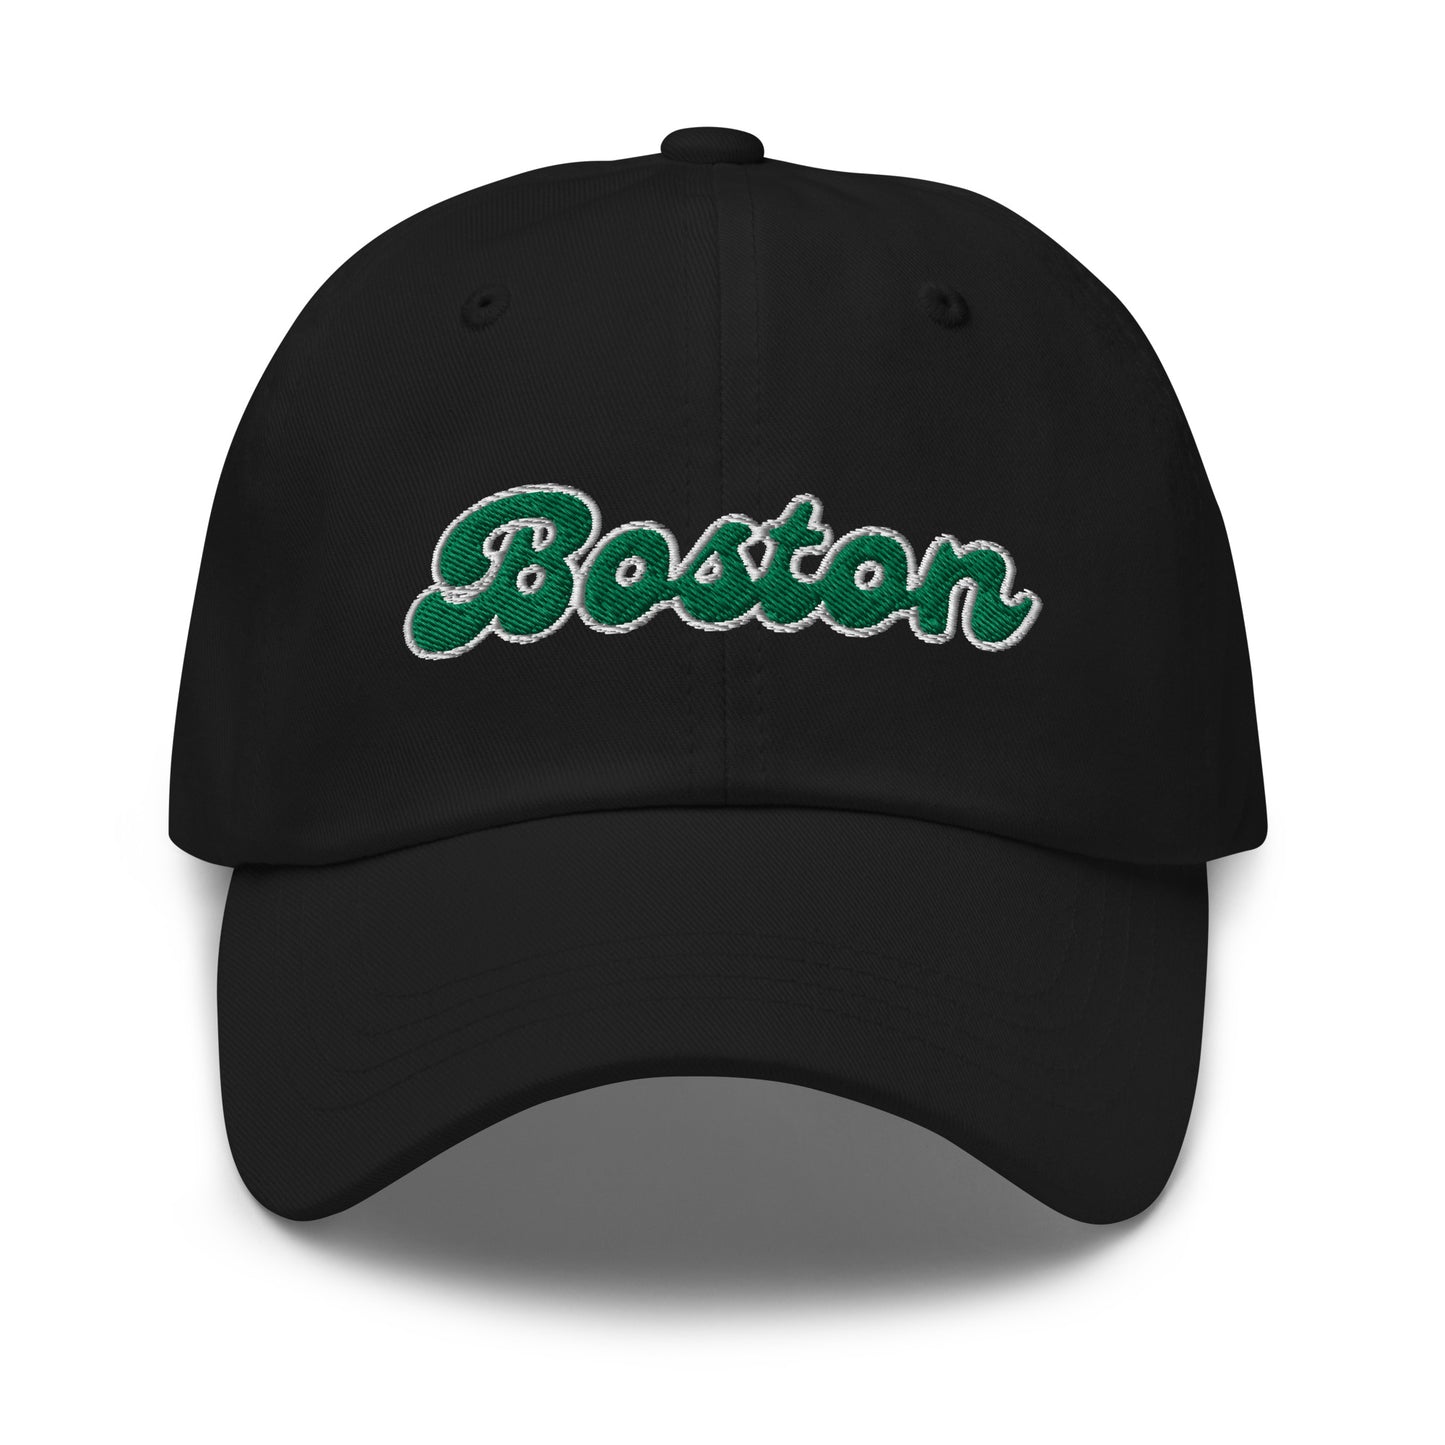 Retro Green and White Boston Hat